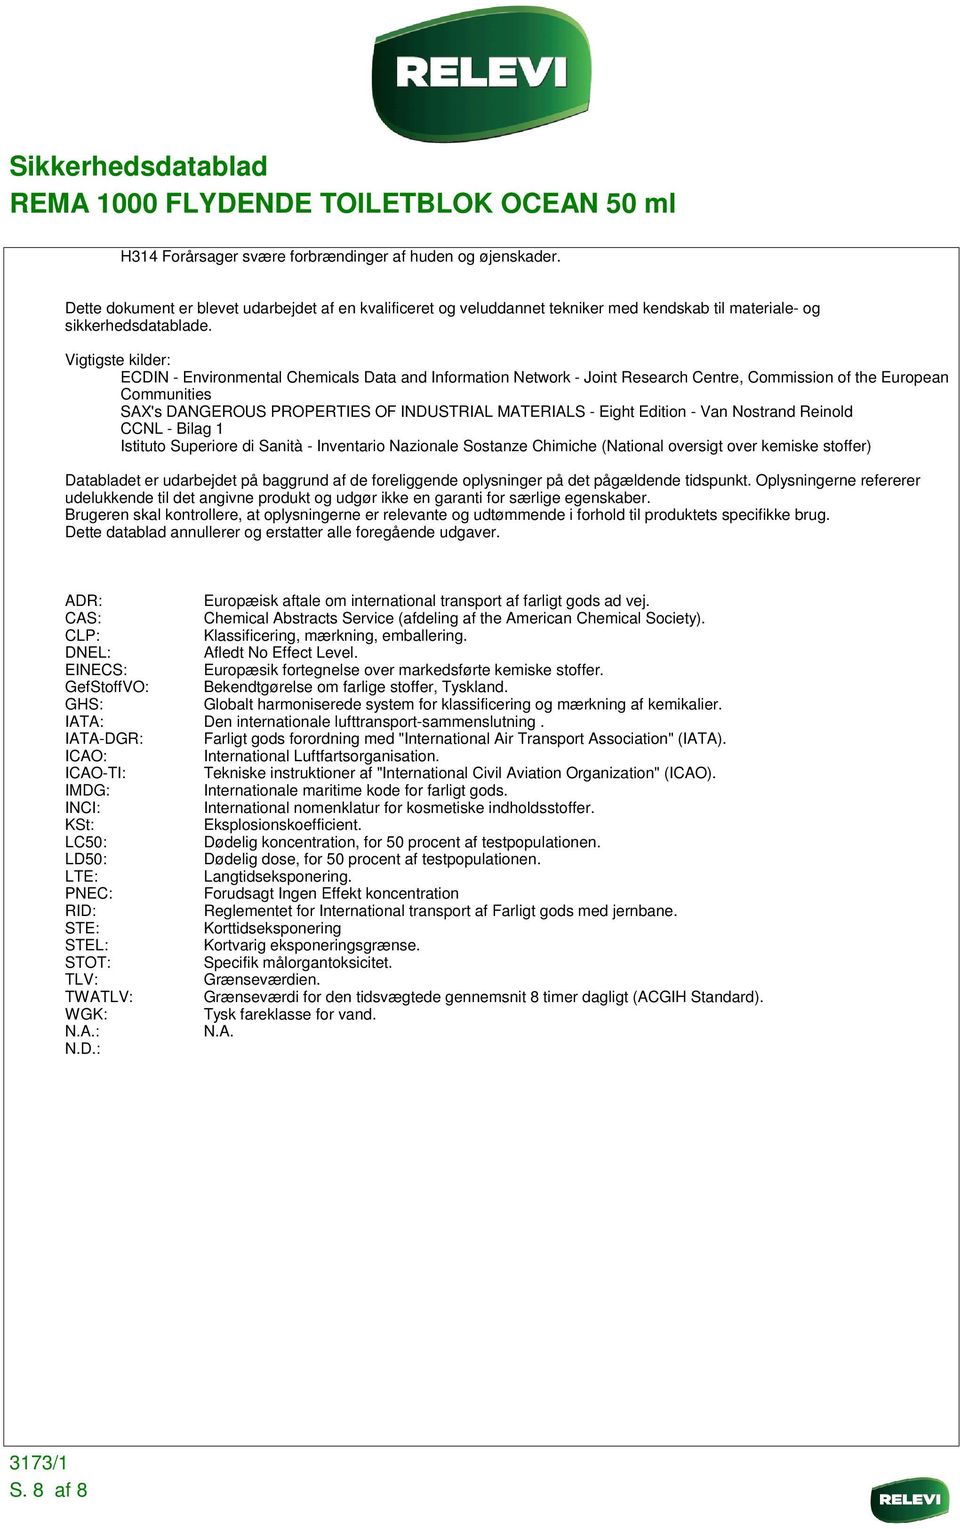 Eight Edition - Van Nostrand Reinold CCNL - Bilag 1 Istituto Superiore di Sanità - Inventario Nazionale Sostanze Chimiche (National oversigt over kemiske stoffer) Databladet er udarbejdet på baggrund